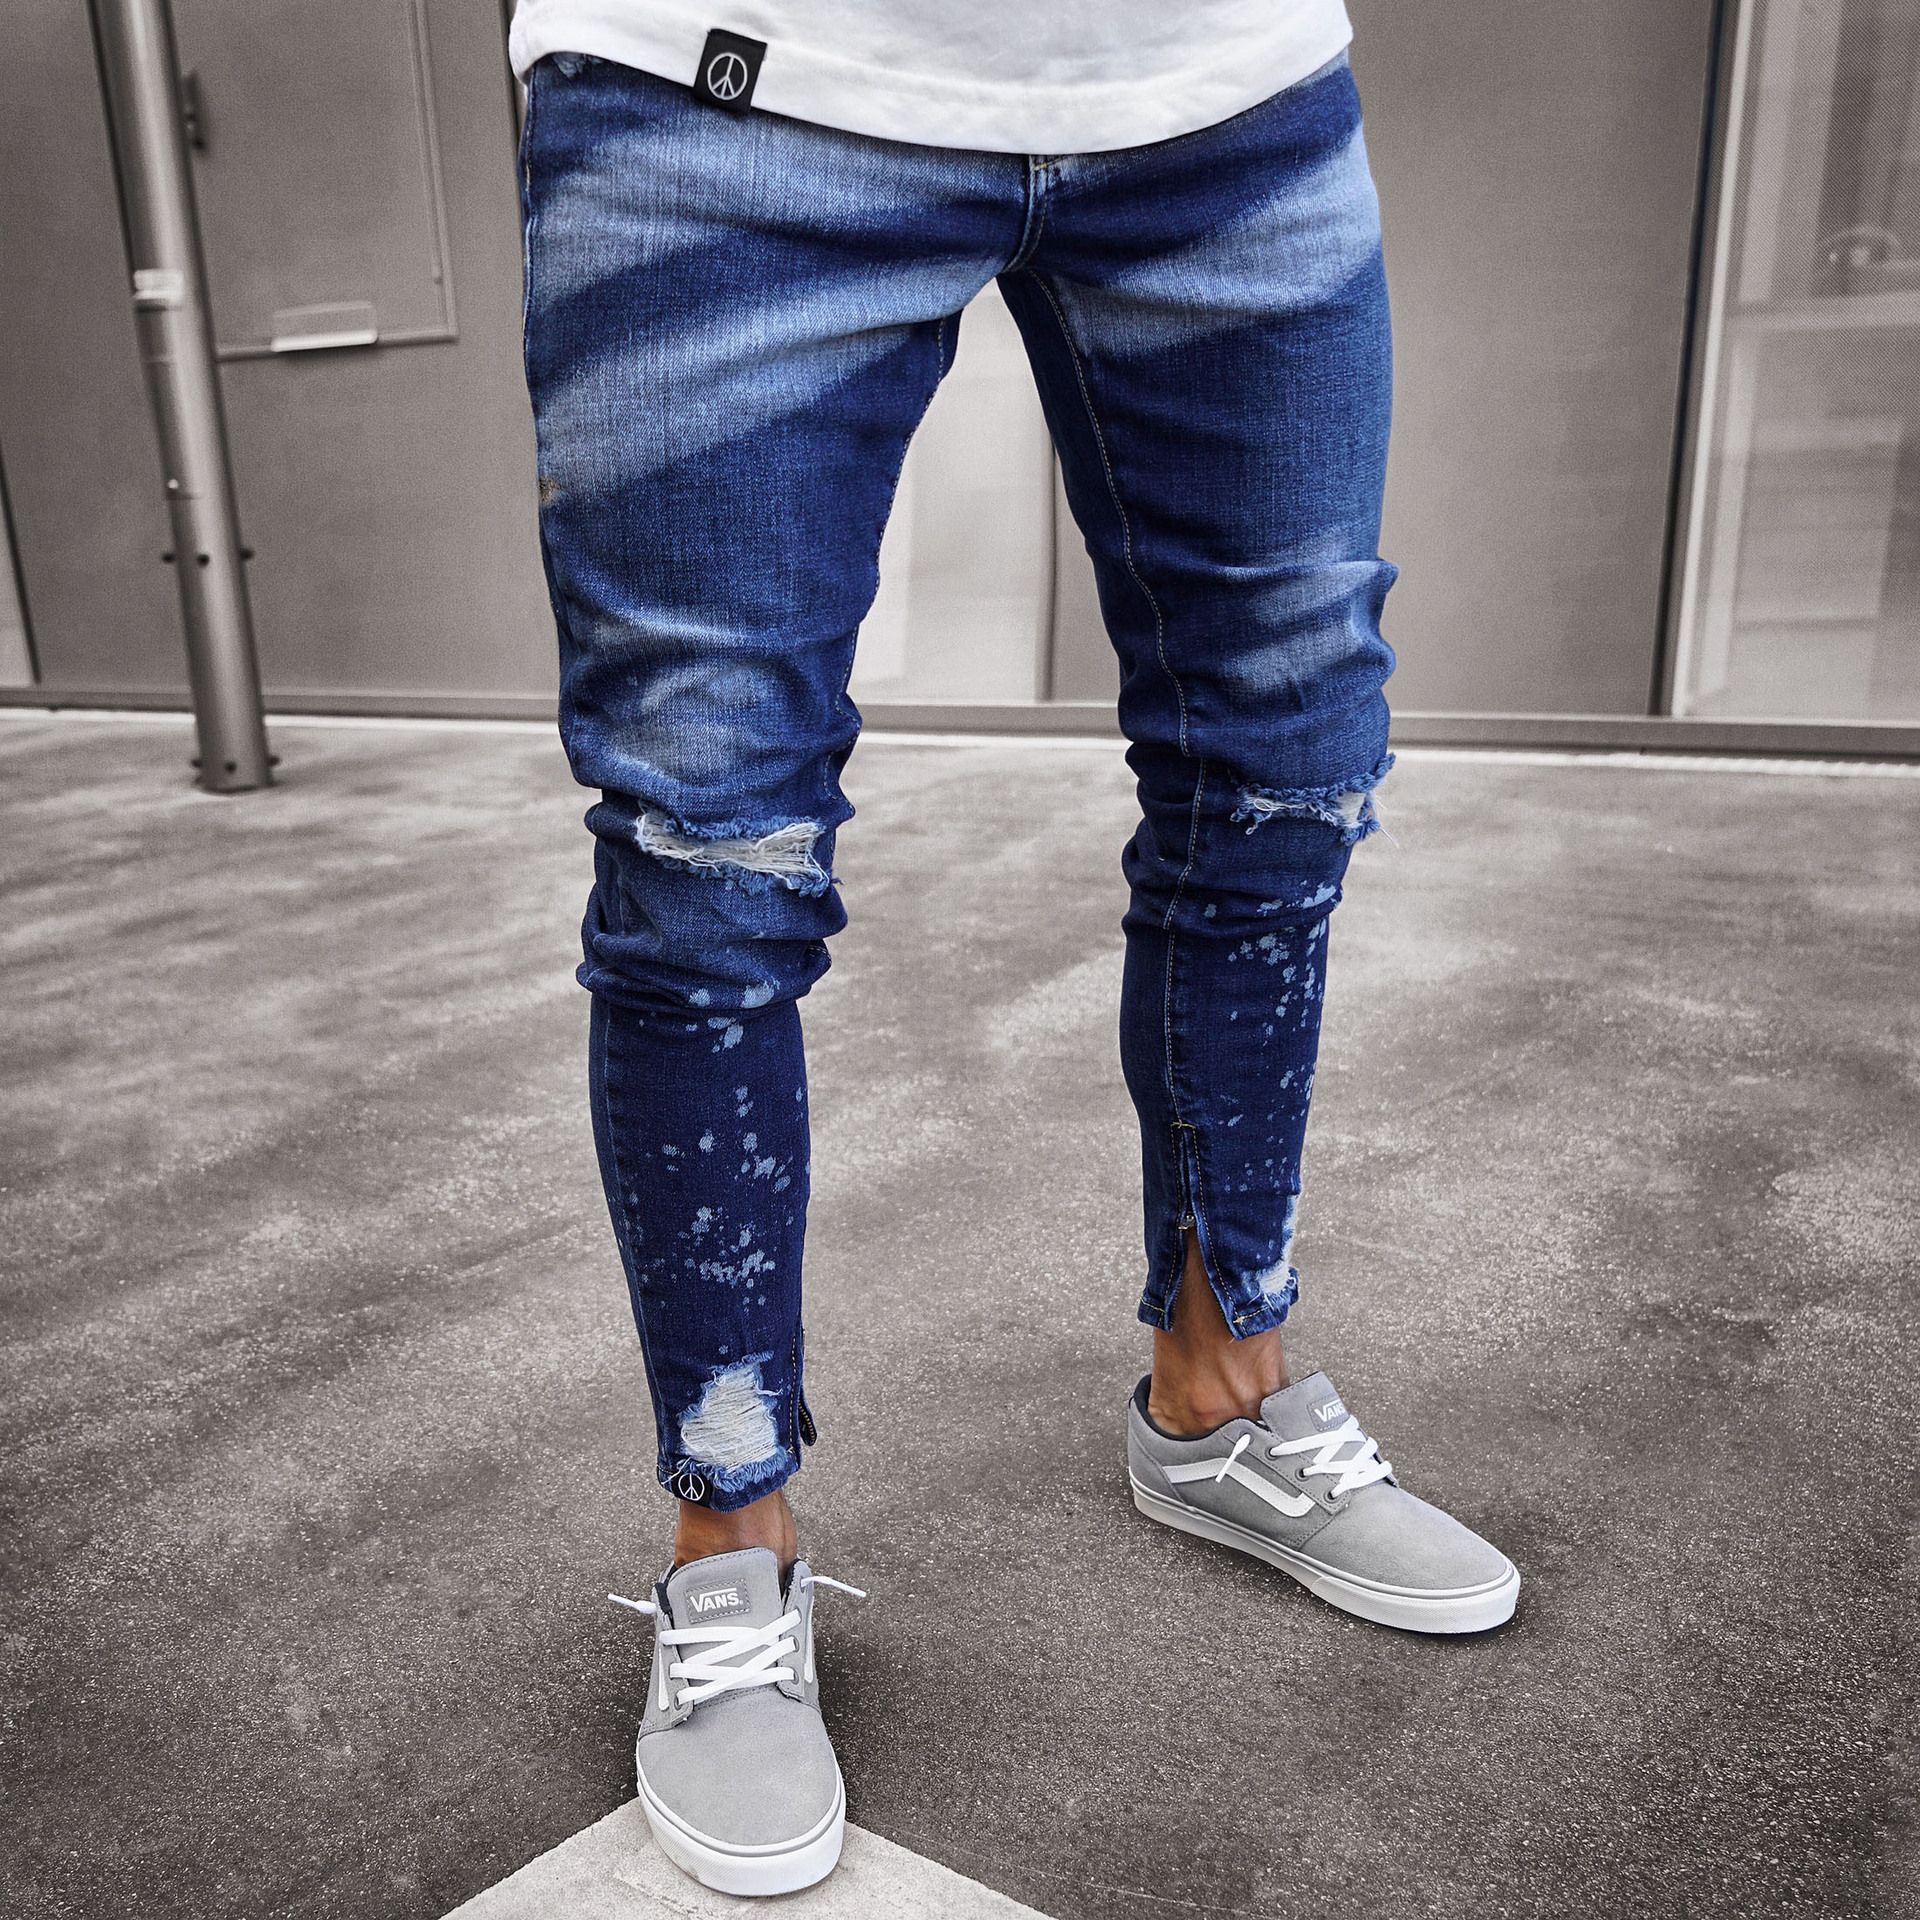 Starbrand Washed Blue Mens Jeans Gradient Pencil Denim Pants Long Slim Fit  Zipper Biker Jeans 2020 Jeans From Starbrand, $29.6